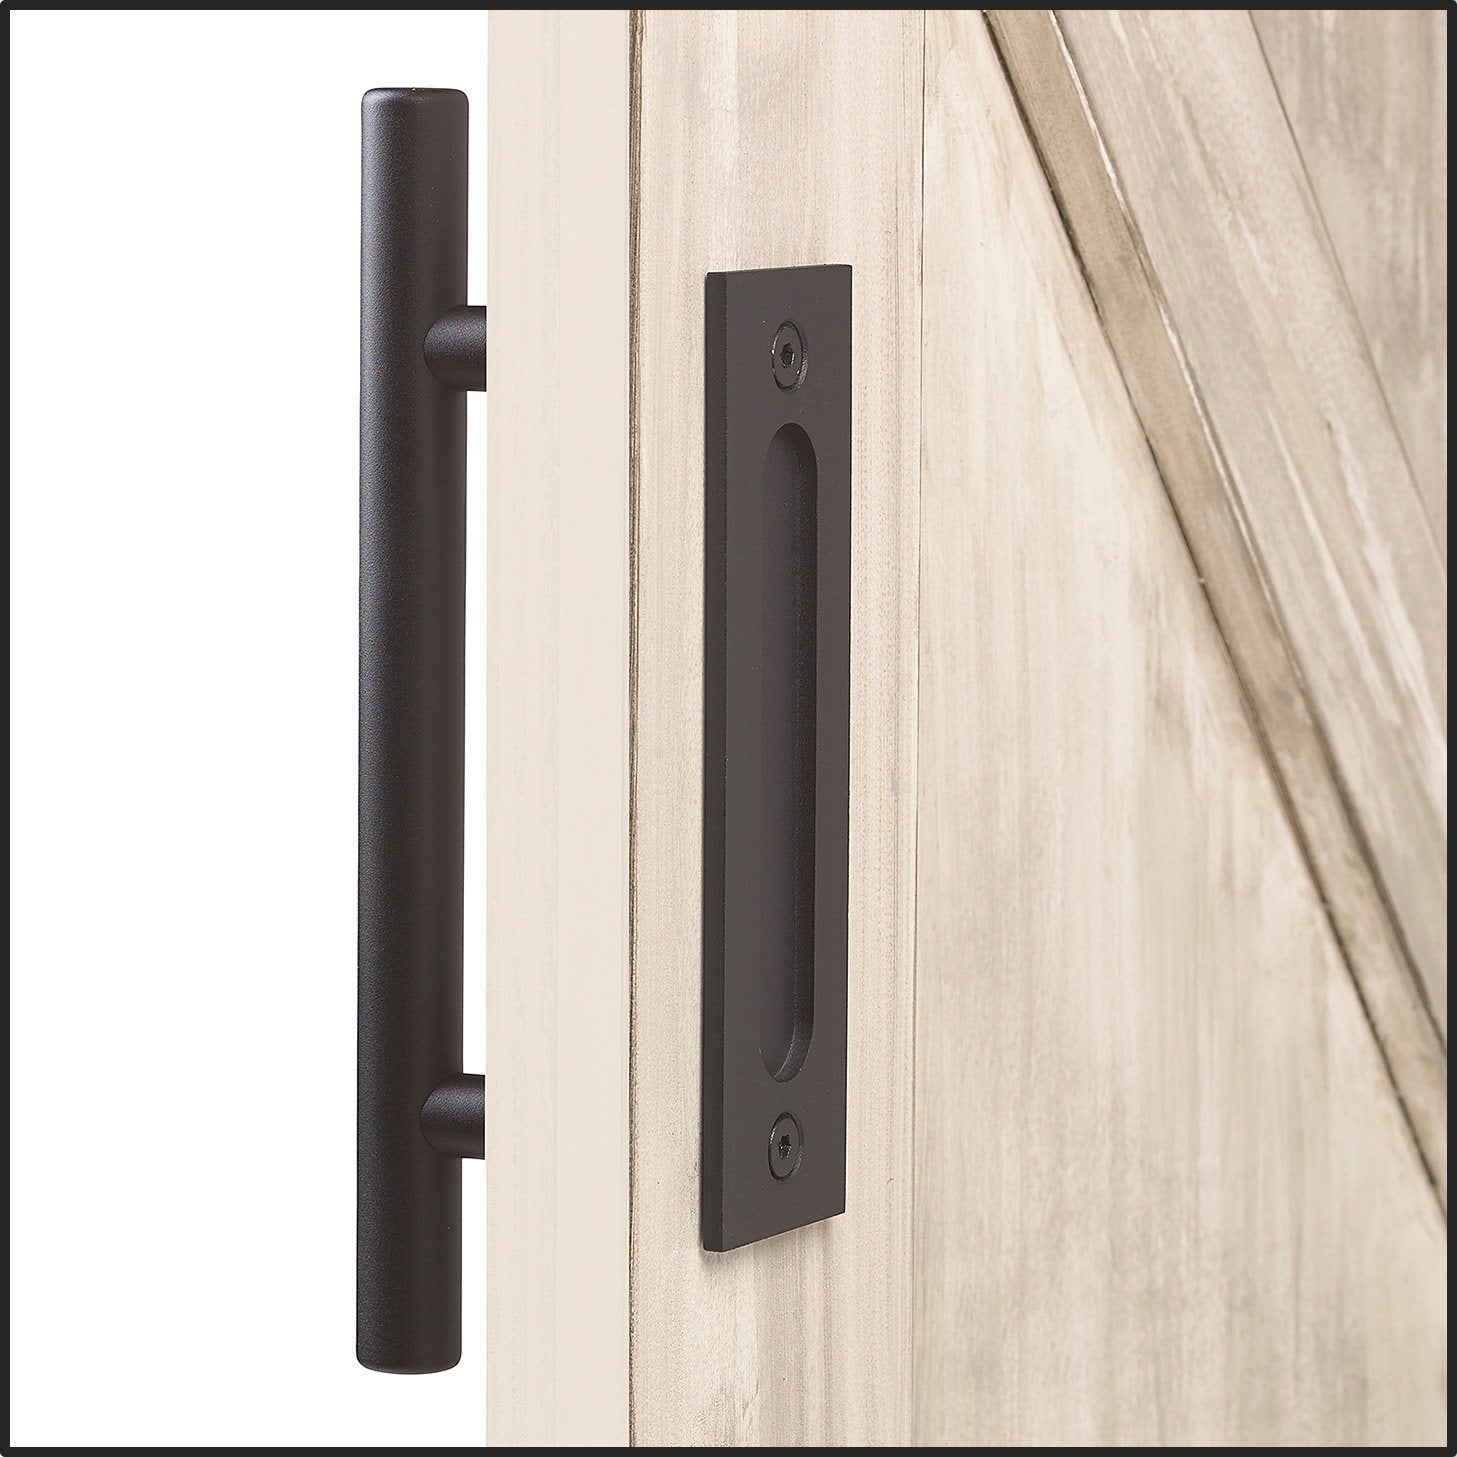 Sliding barn door handle pull with latch | MJC & Company